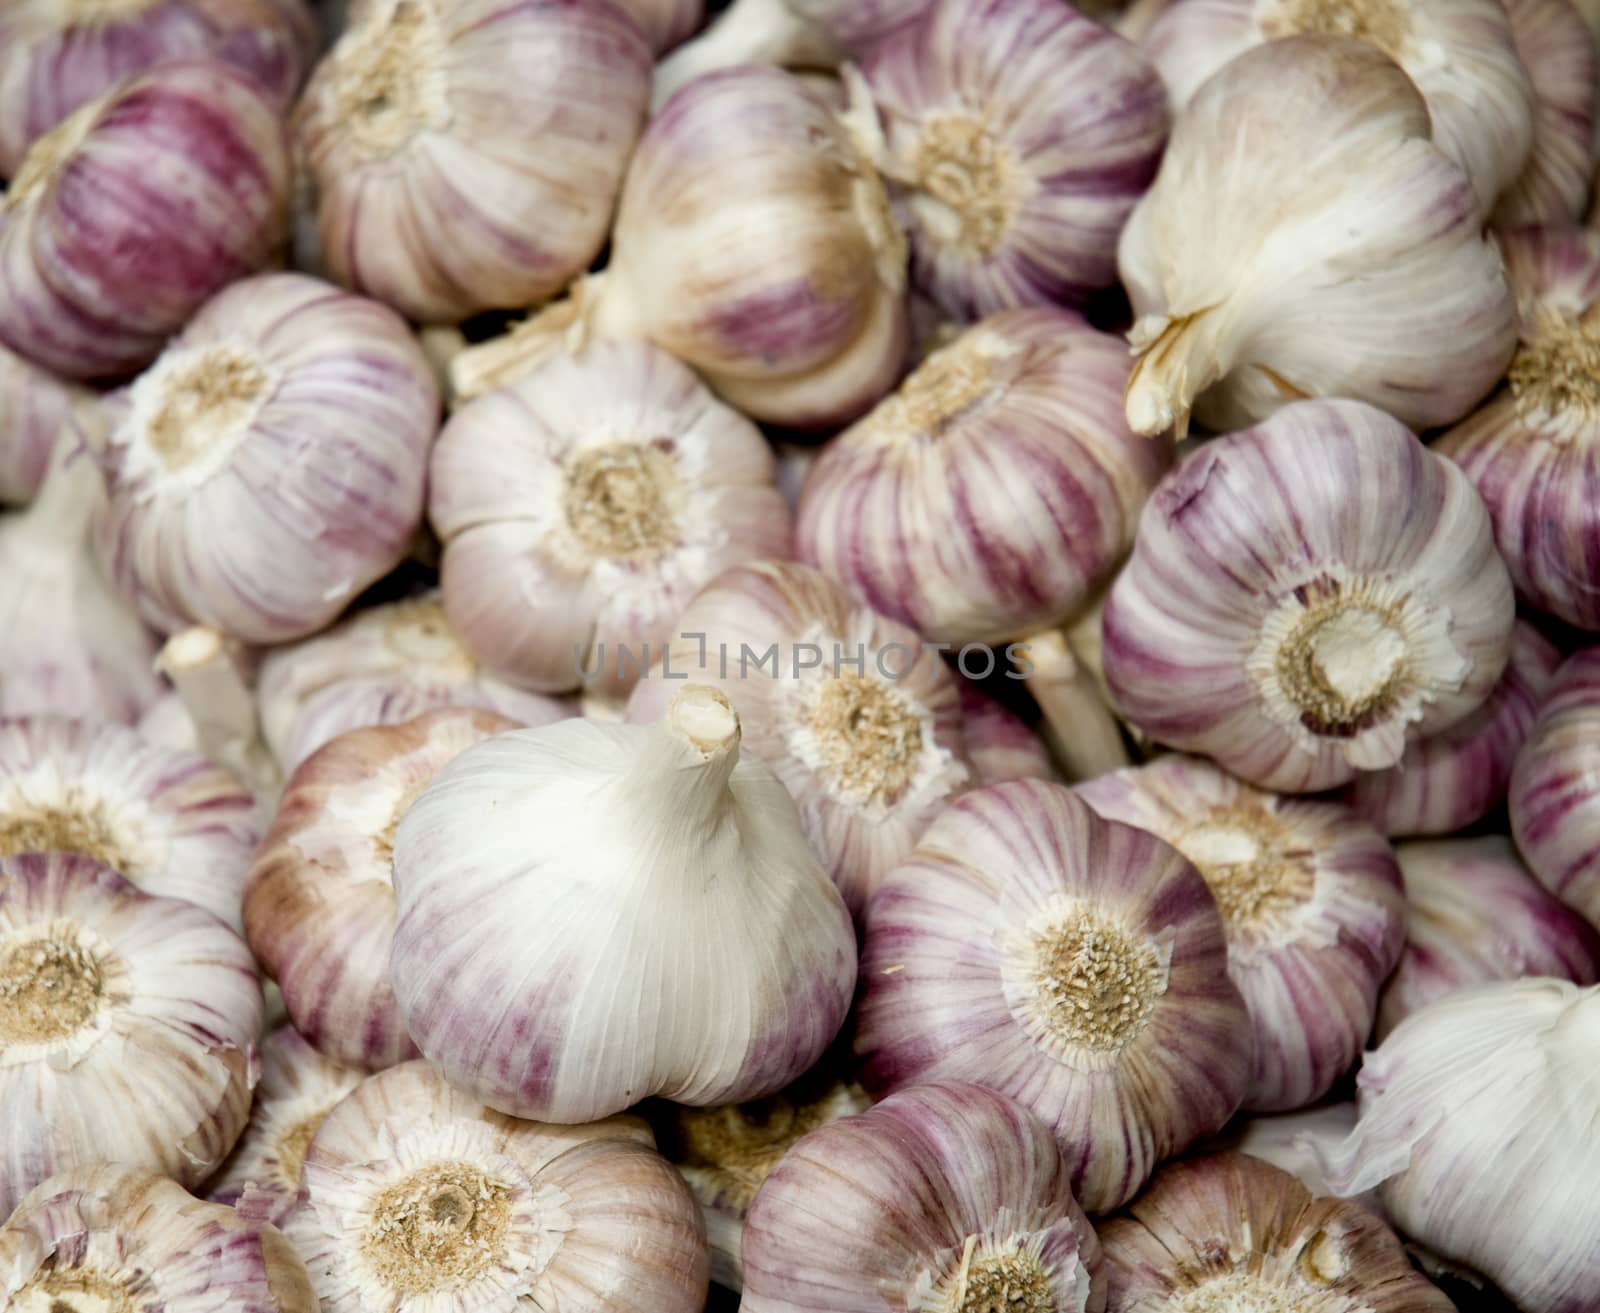 A basket of whole garlic